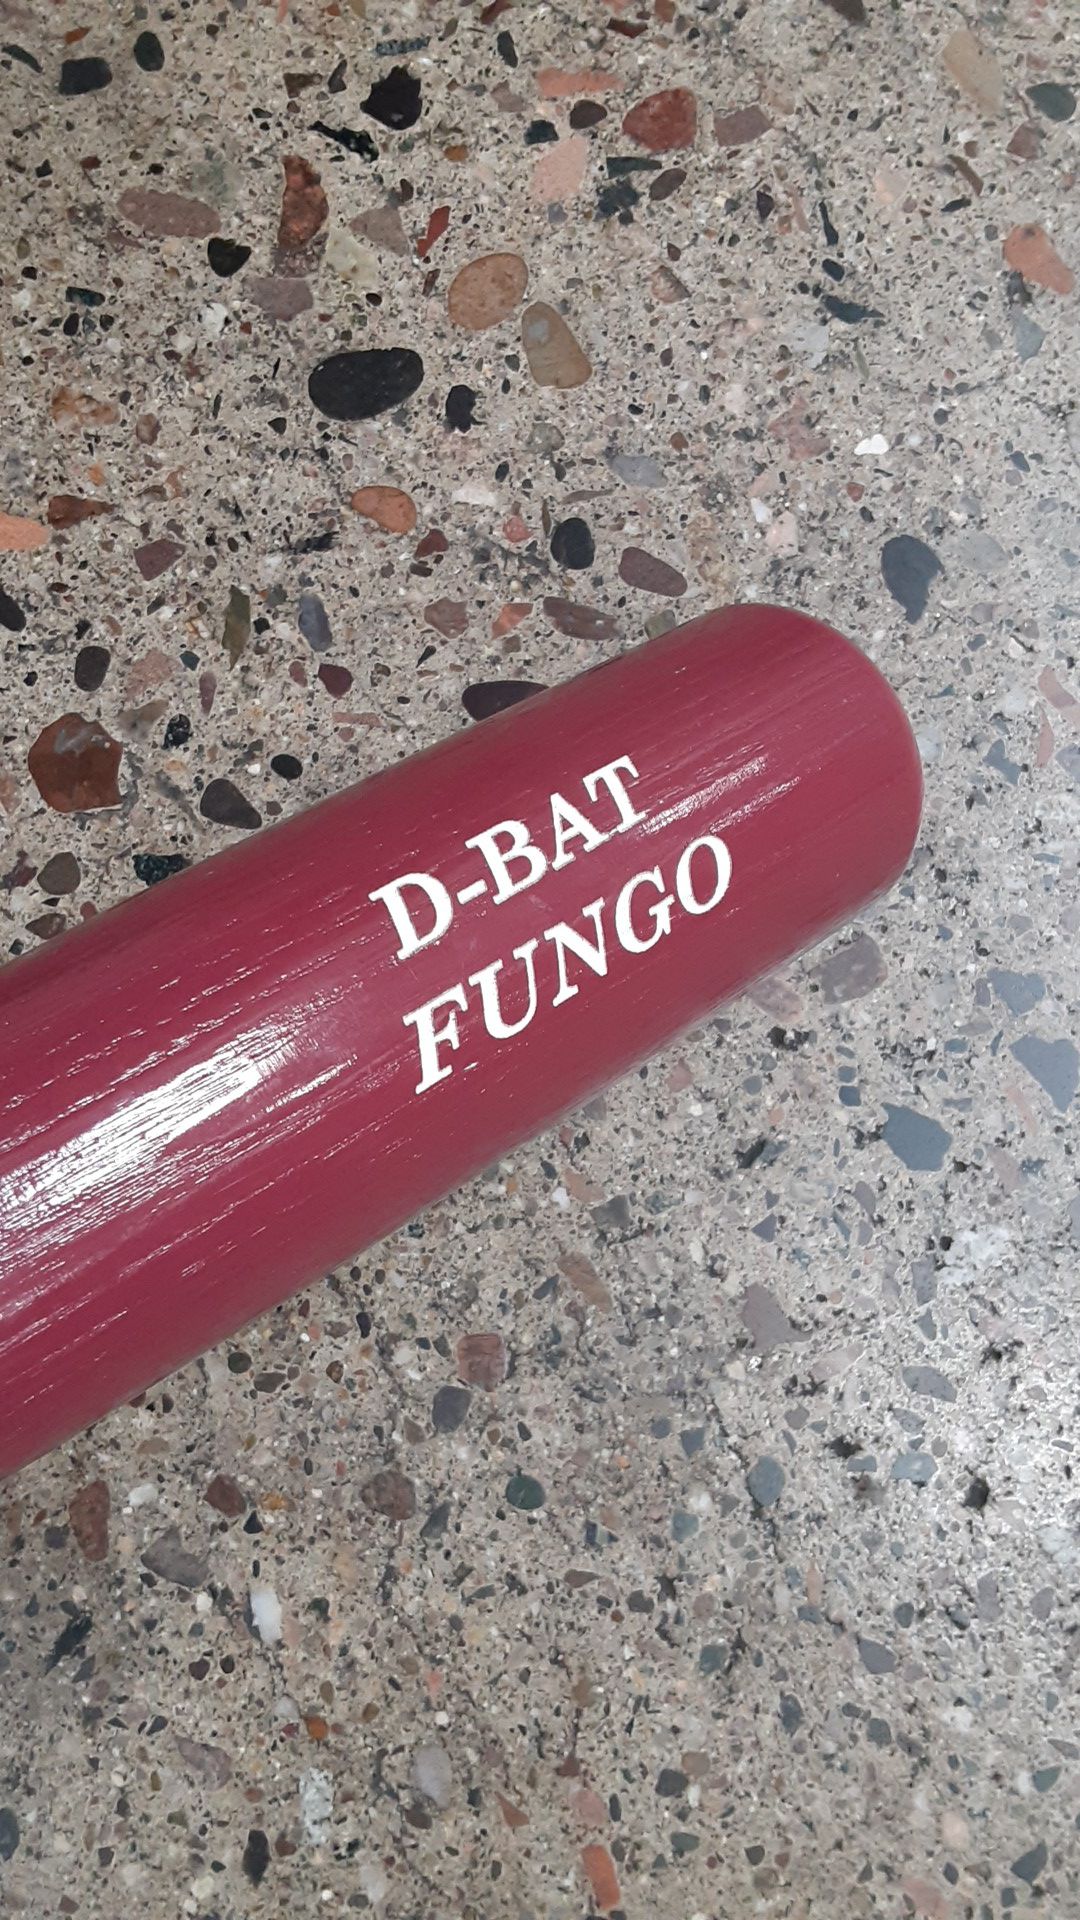 D-BAT Fungo 35 in baseball softball bat